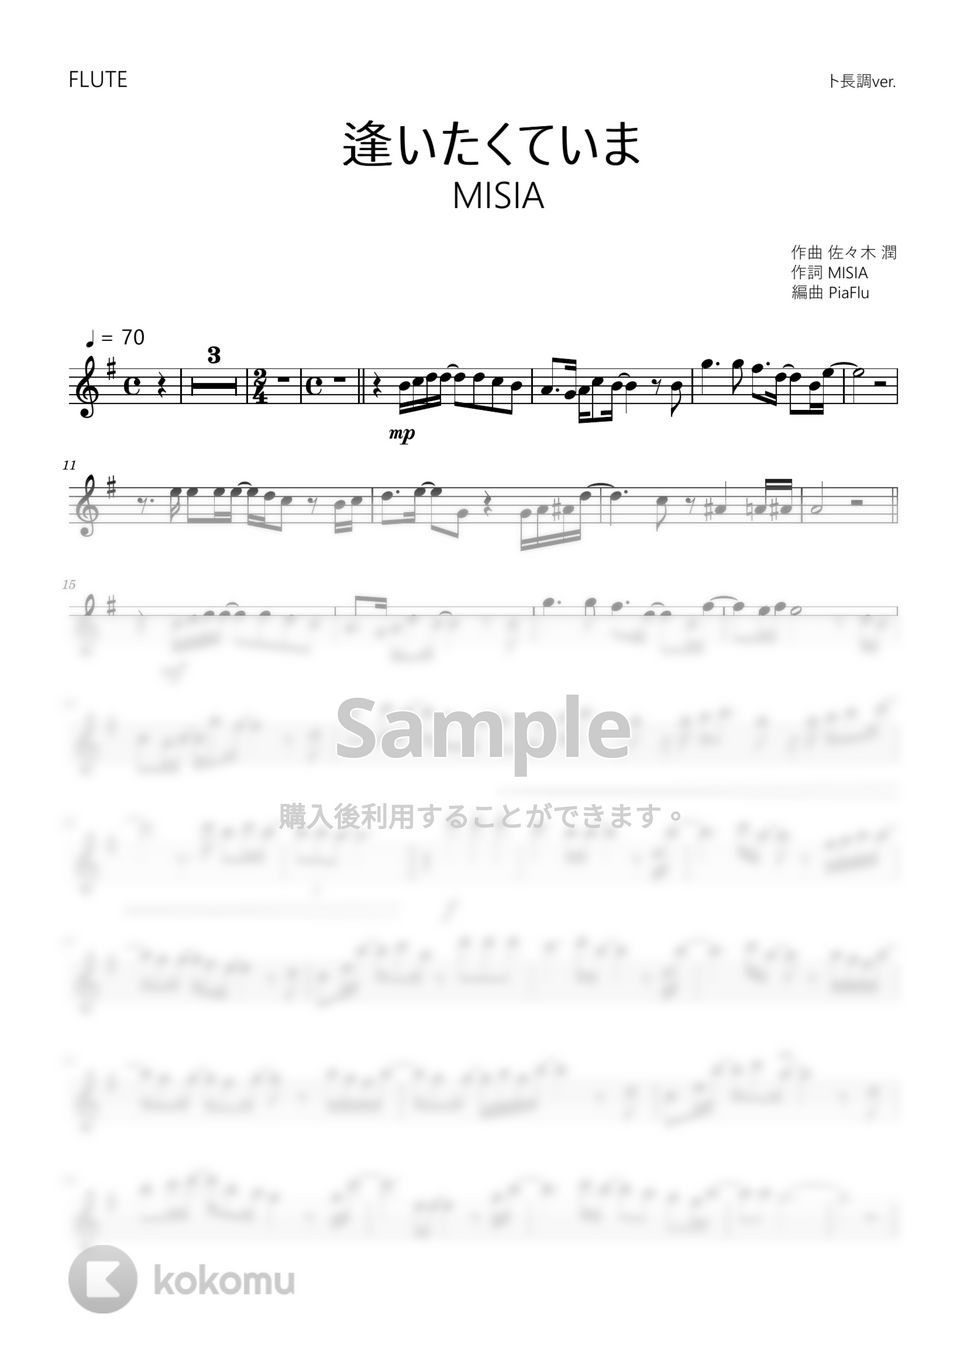 MISIA - 逢いたくていま (ト長調ver. / フルート) by PiaFlu